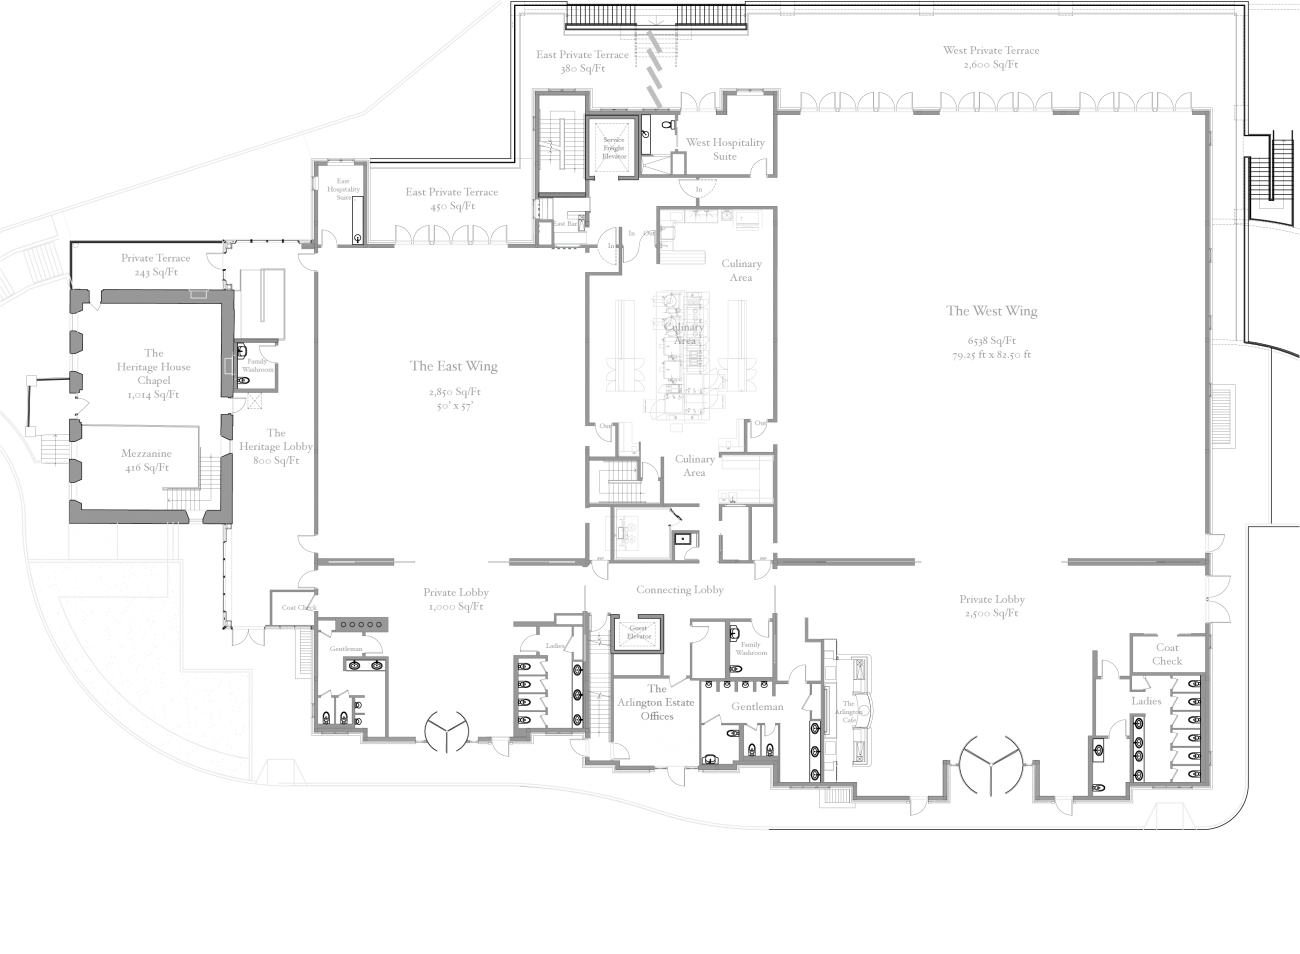 Floorplan of the entire estate